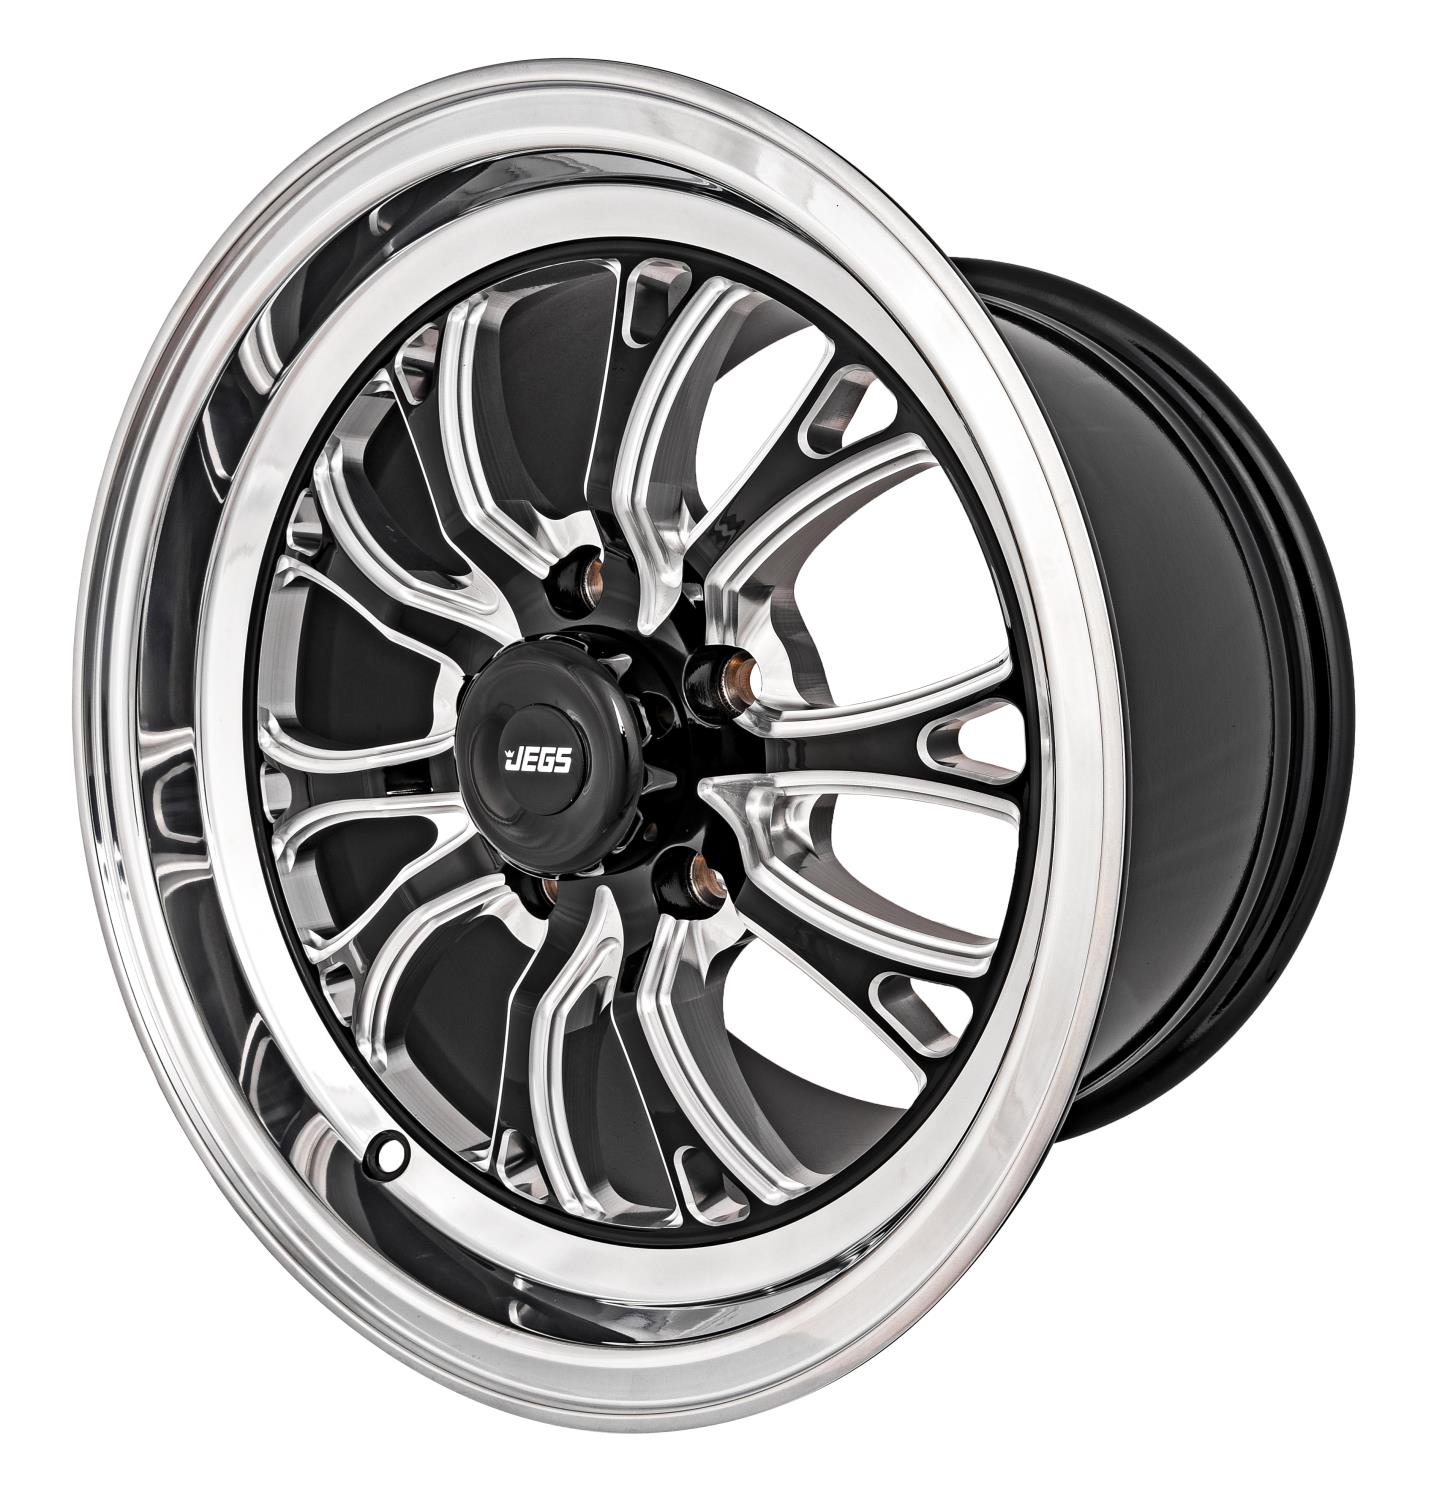 SSR Spike Wheel [Size: 15" x 10"] Polished Lip with Black Milled Spokes